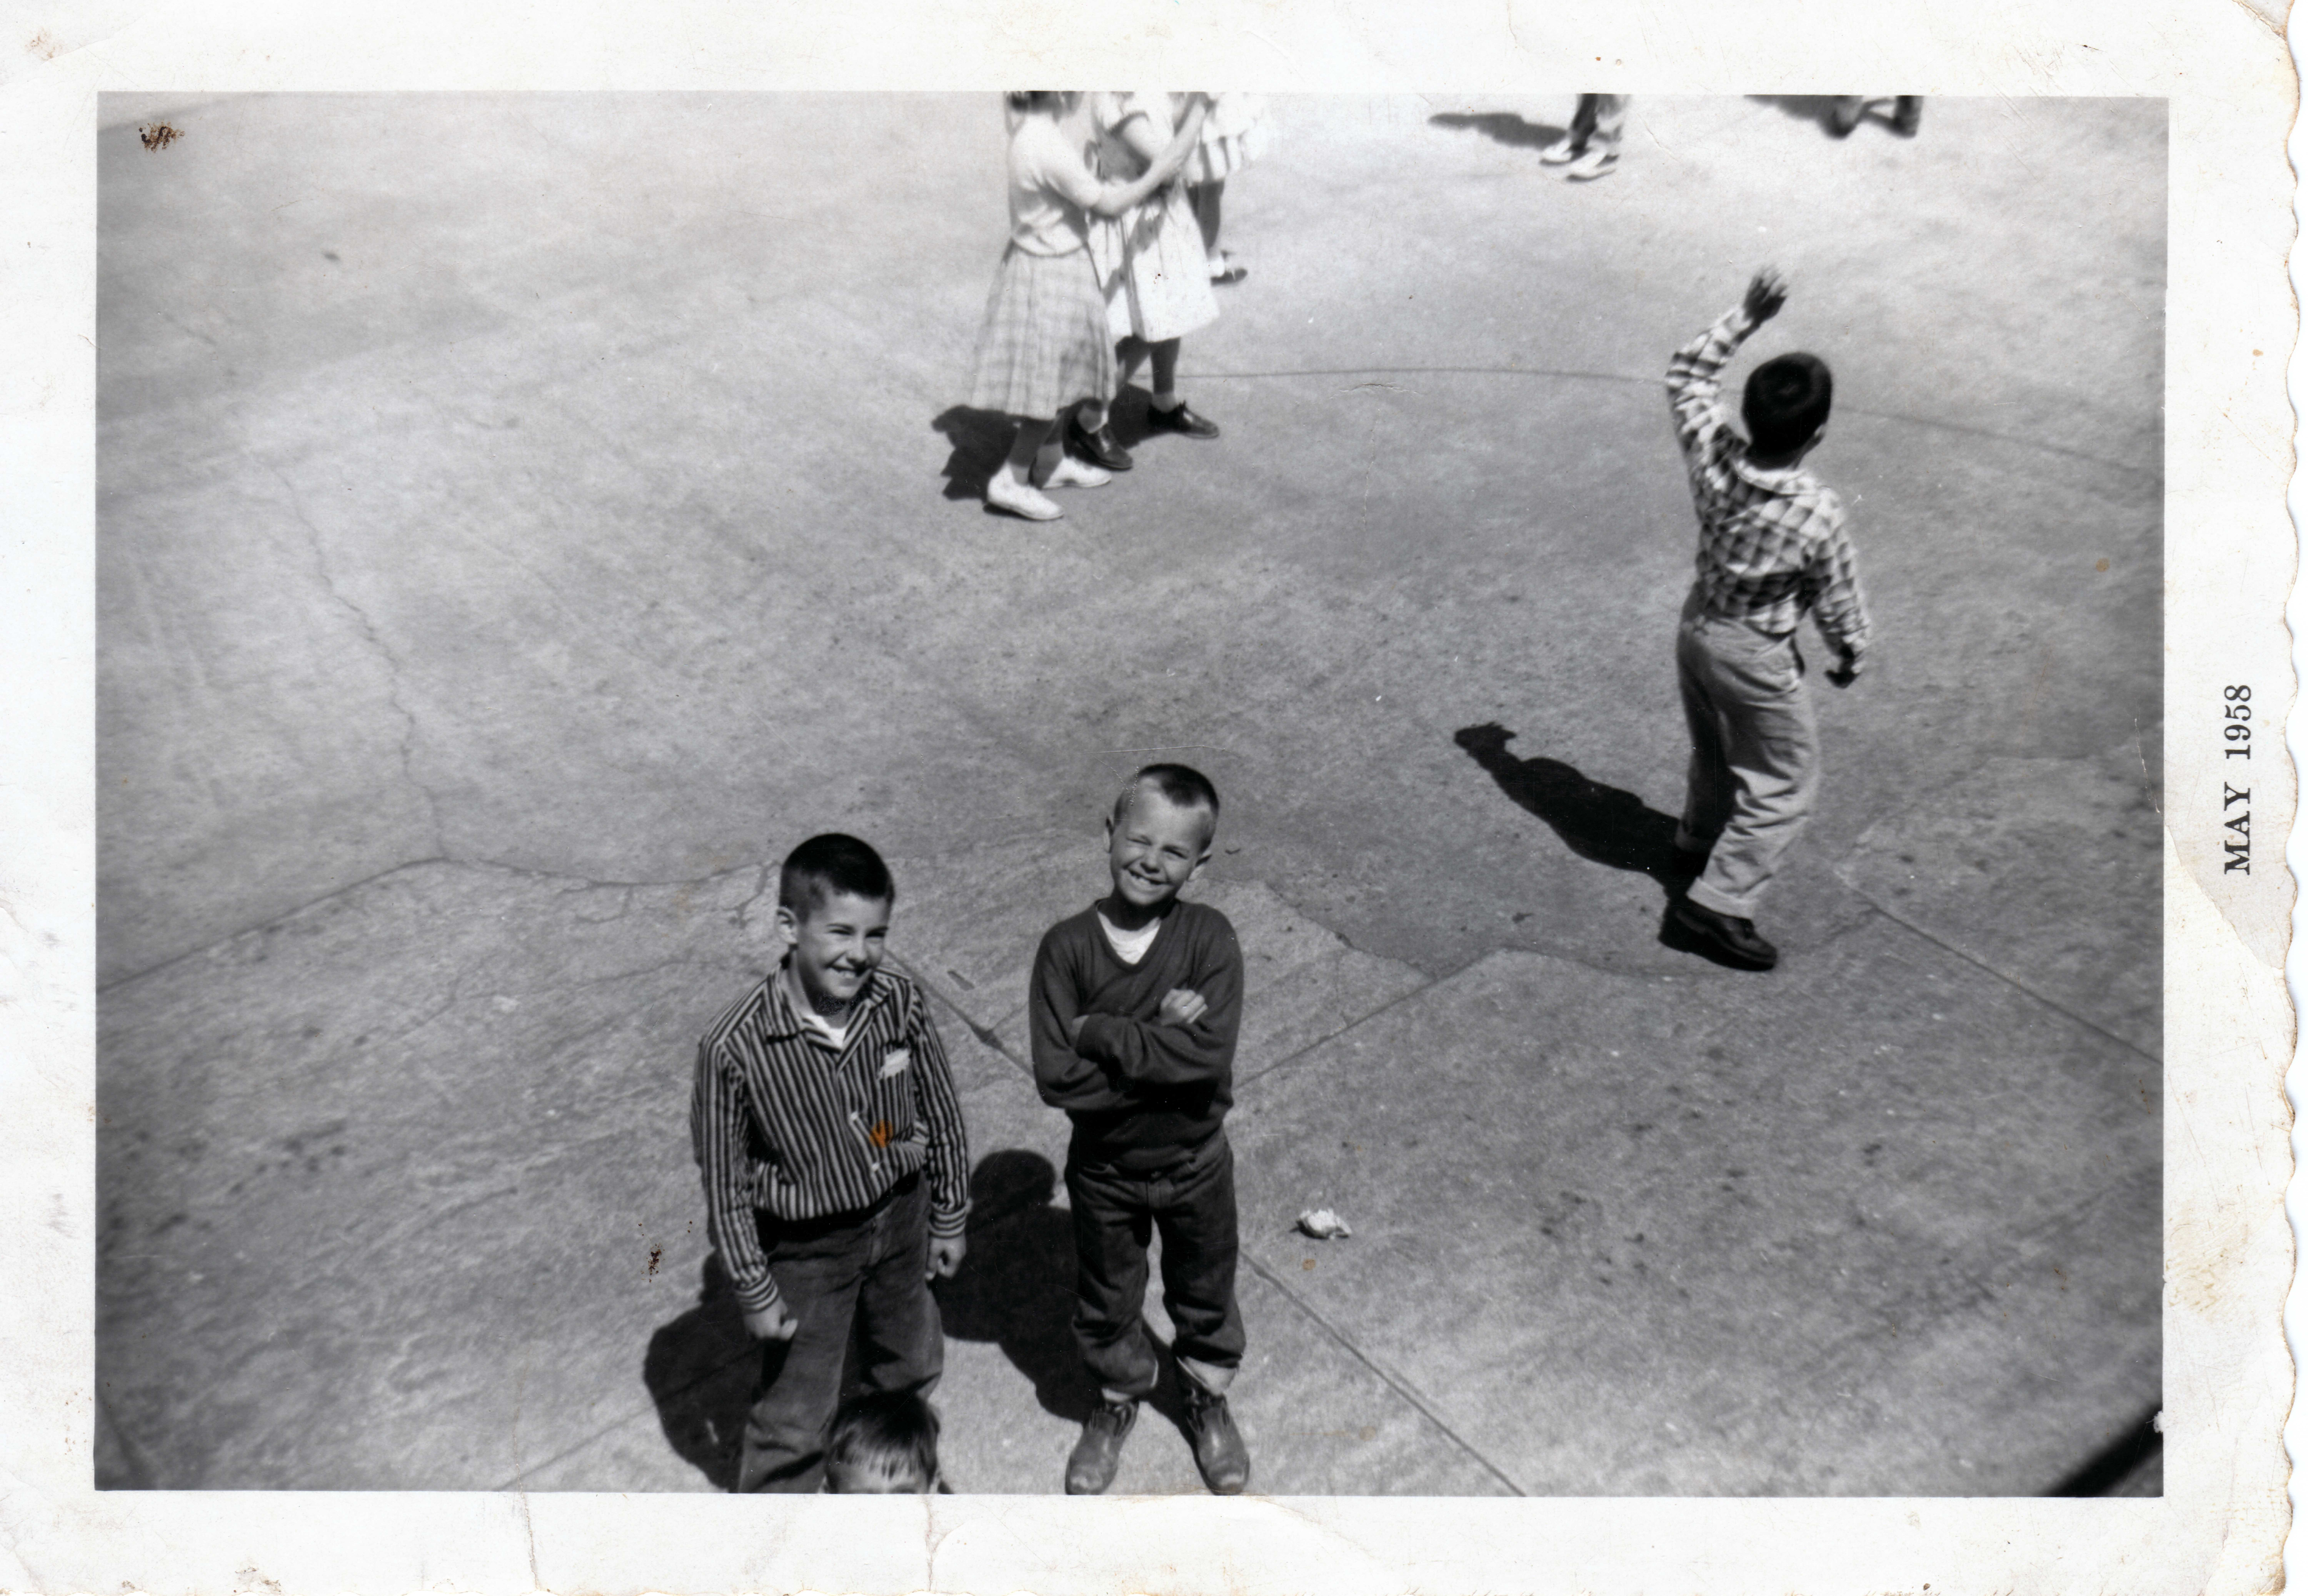 rb lewis and clark grade school playground 1958 001